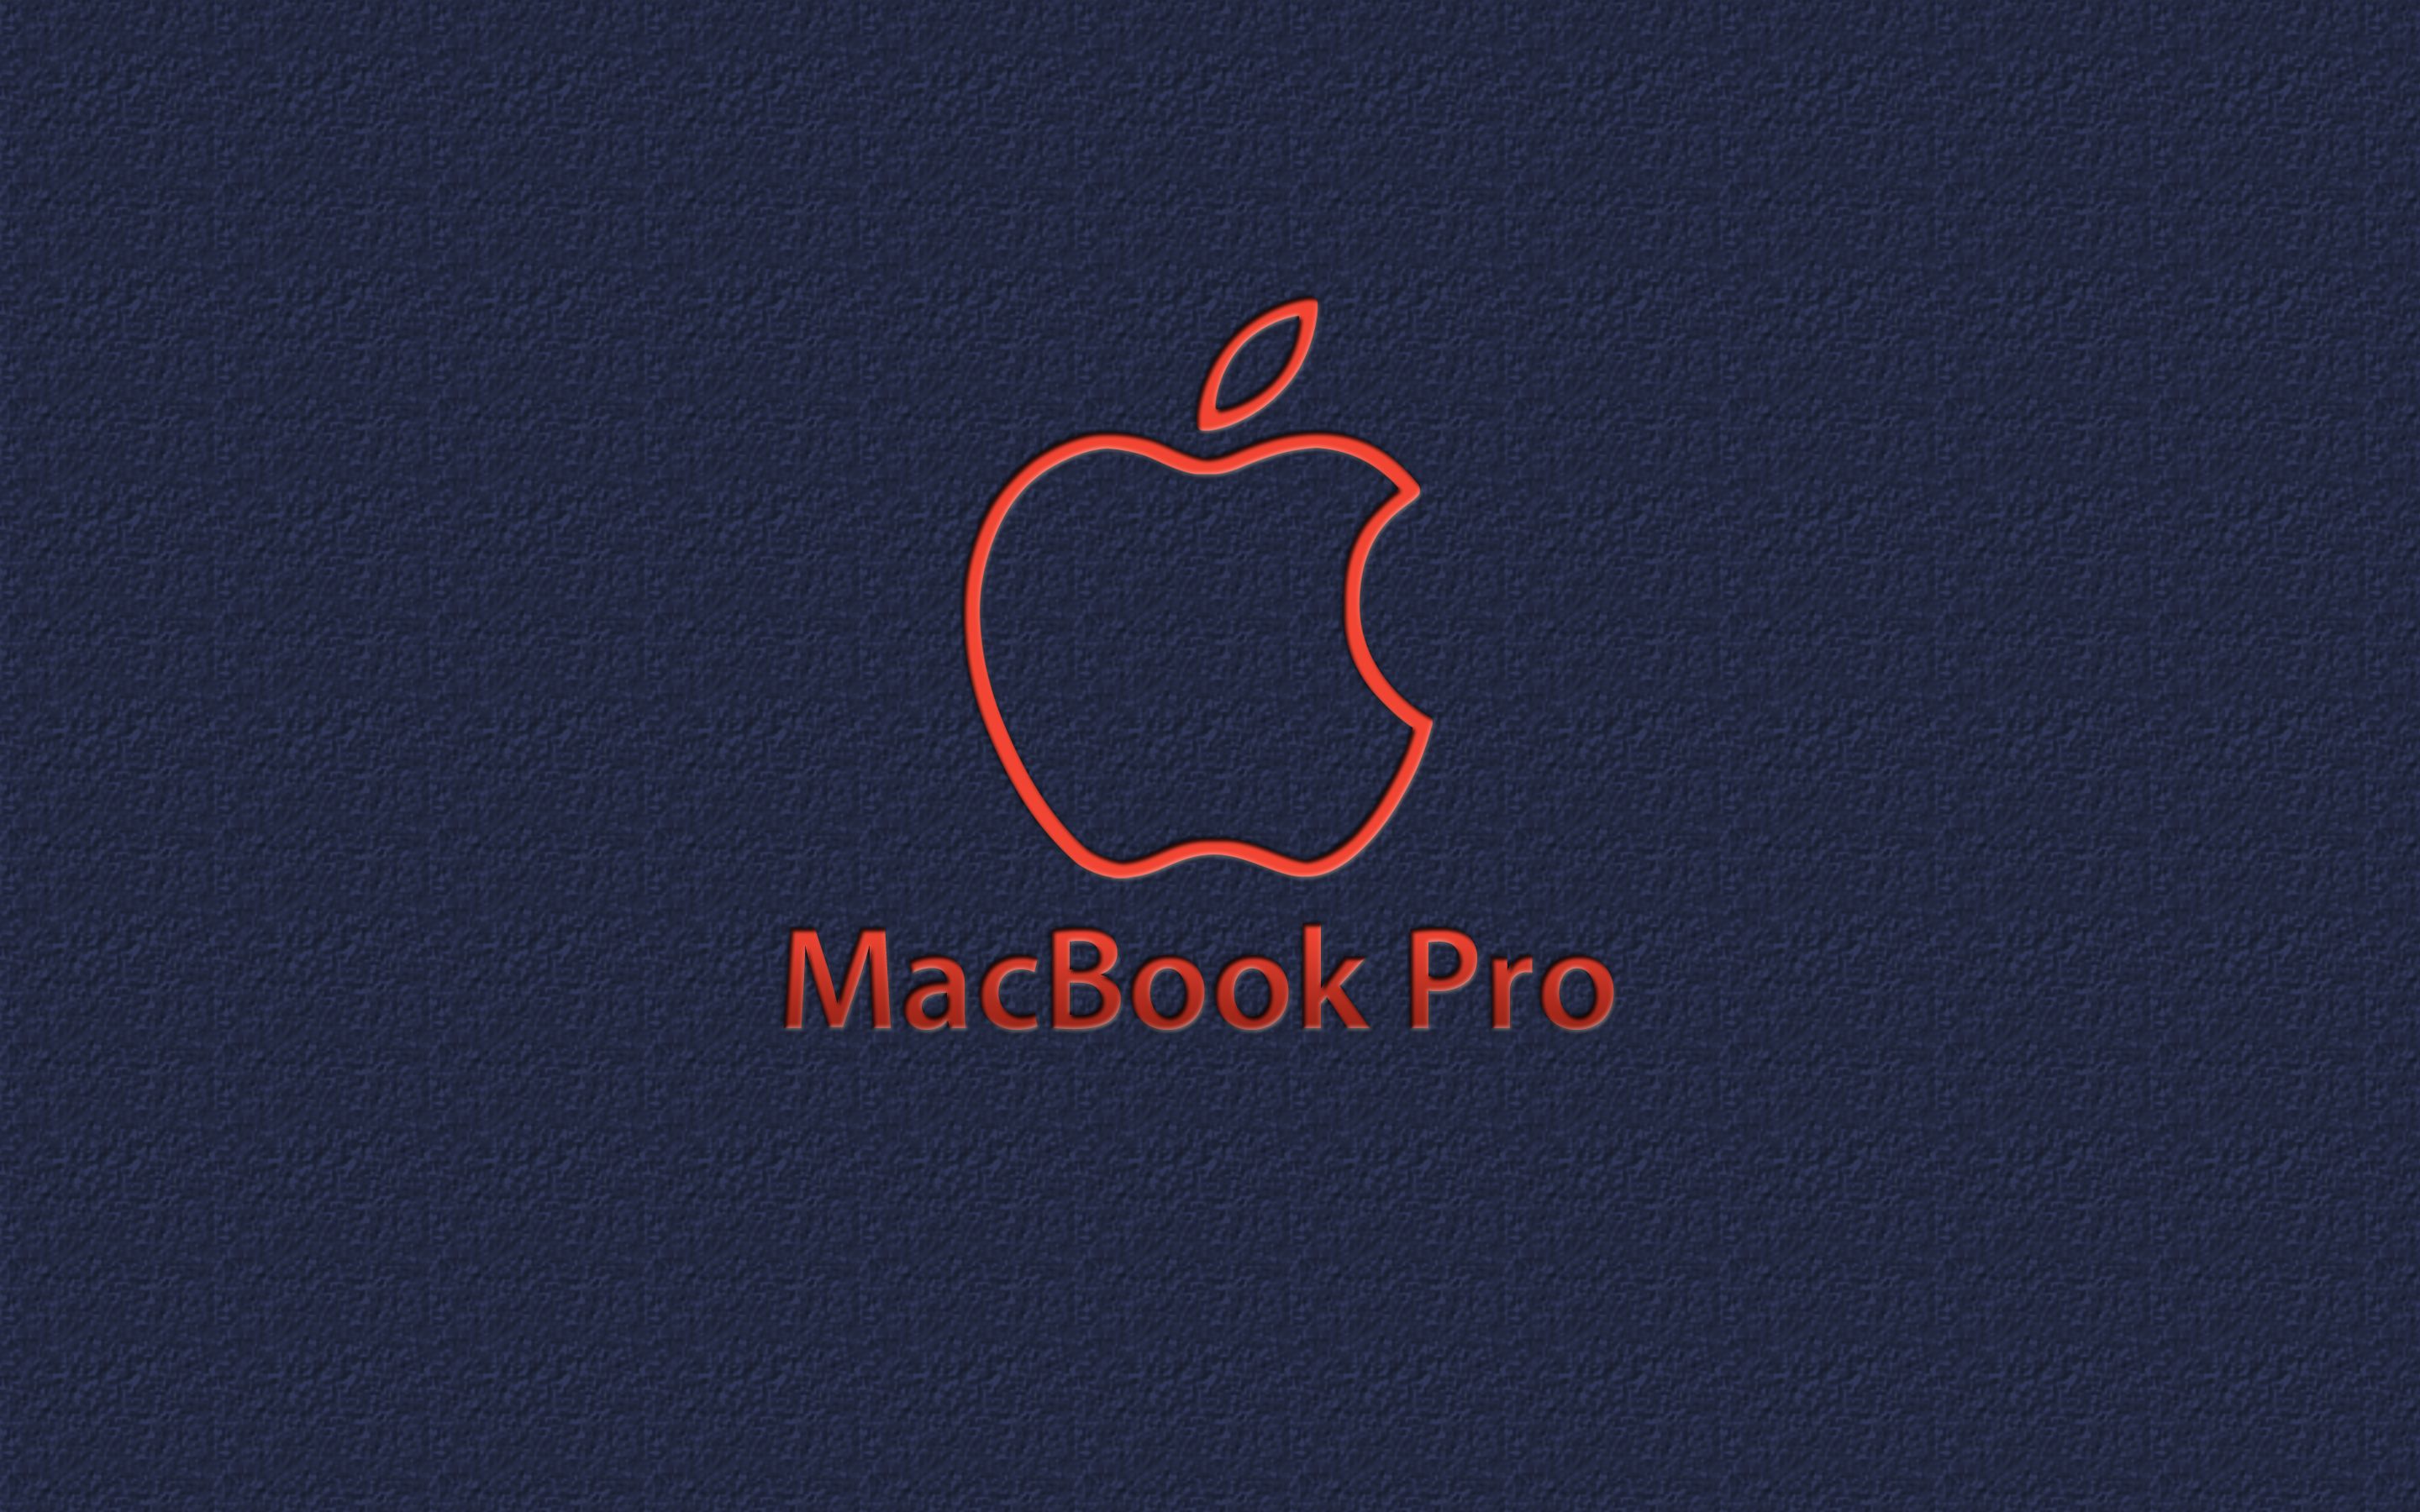 iPhone iPad MacBook Air MacBook Pro iMac Apple Logo Wallpaper The